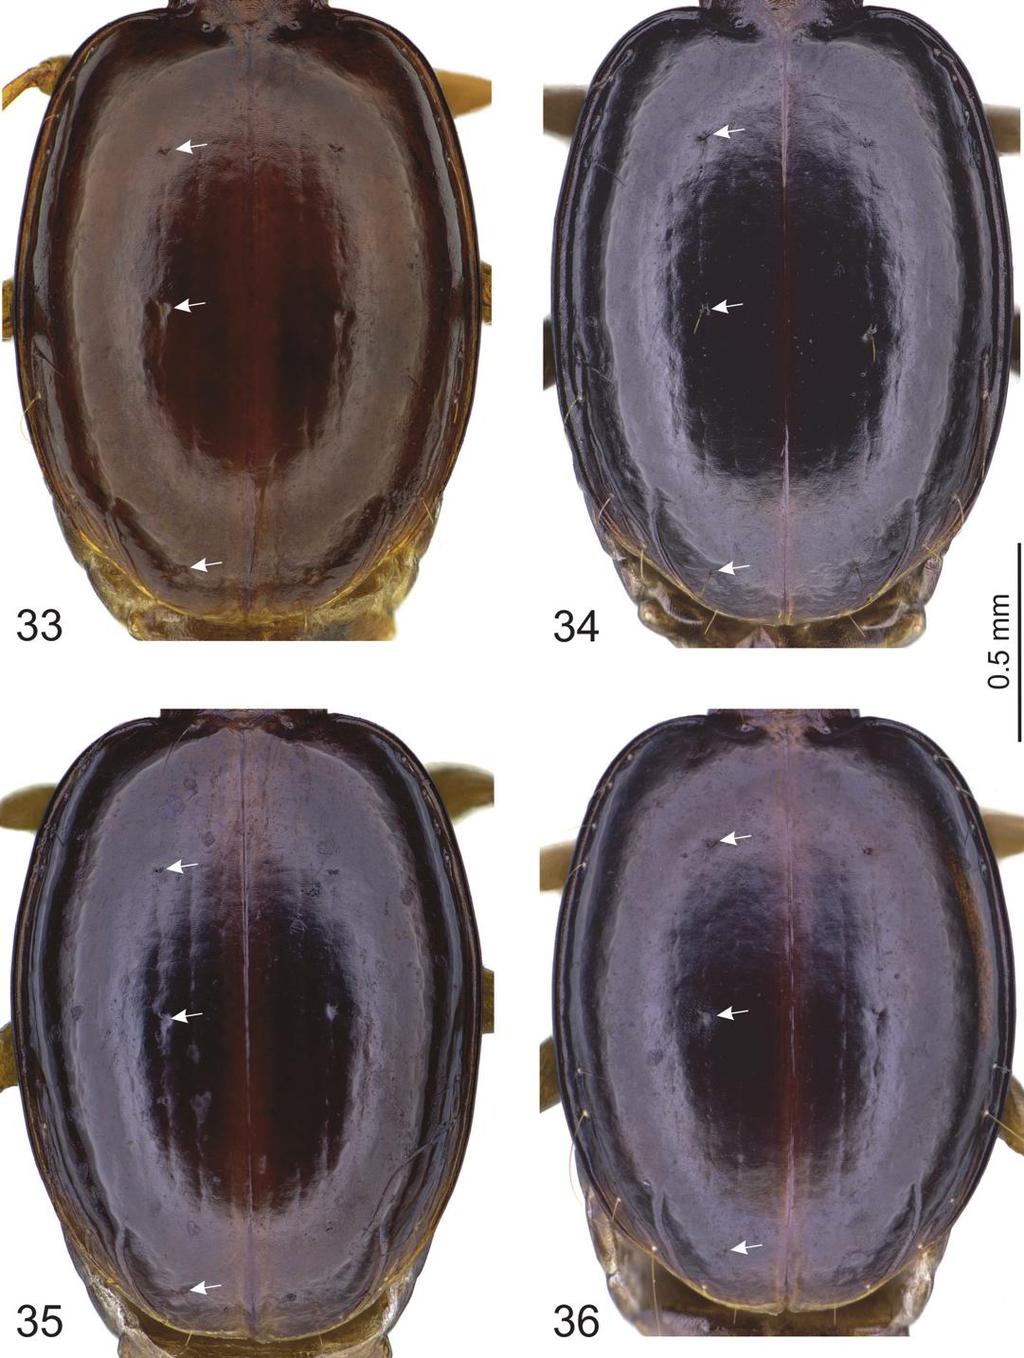 European Journal of Taxonomy 446: 1 82 (2018) Figs 33 36. Trechus spp., elytra. 33. T. dodola sp. nov., holotype. 34. T. adaba sp. nov., paratype,. 35.